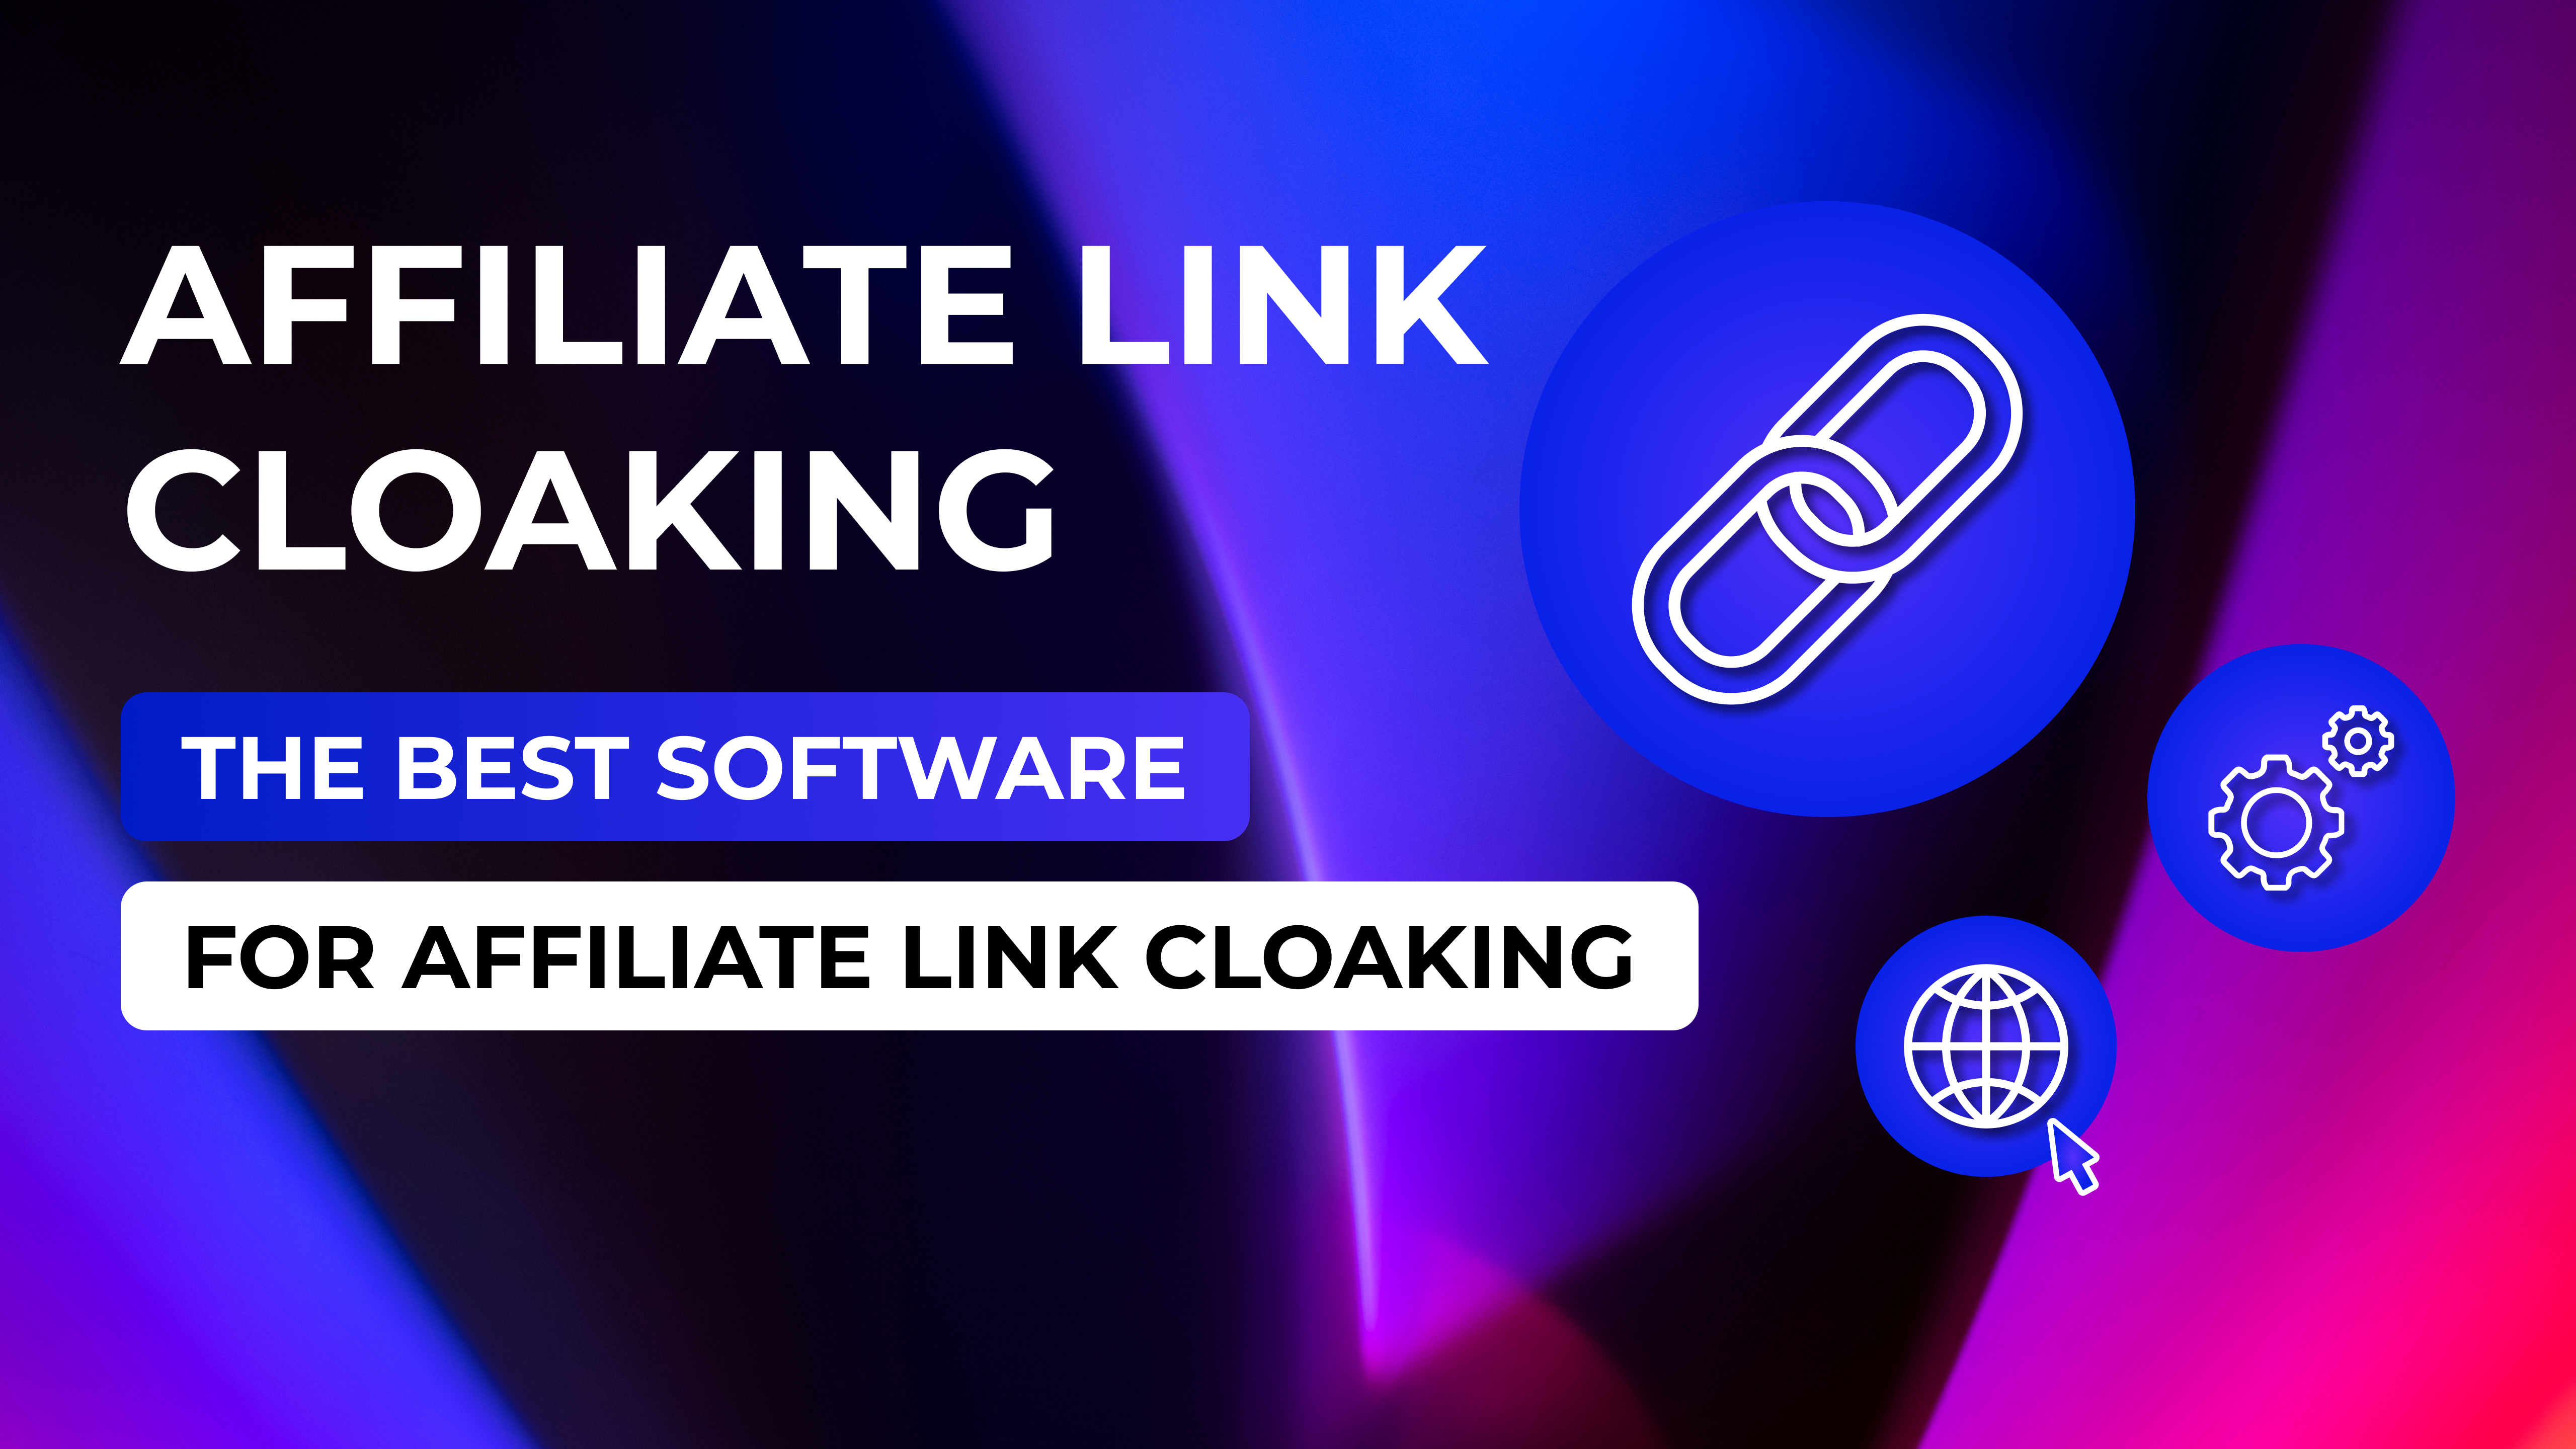 Affiliate Link Cloaking